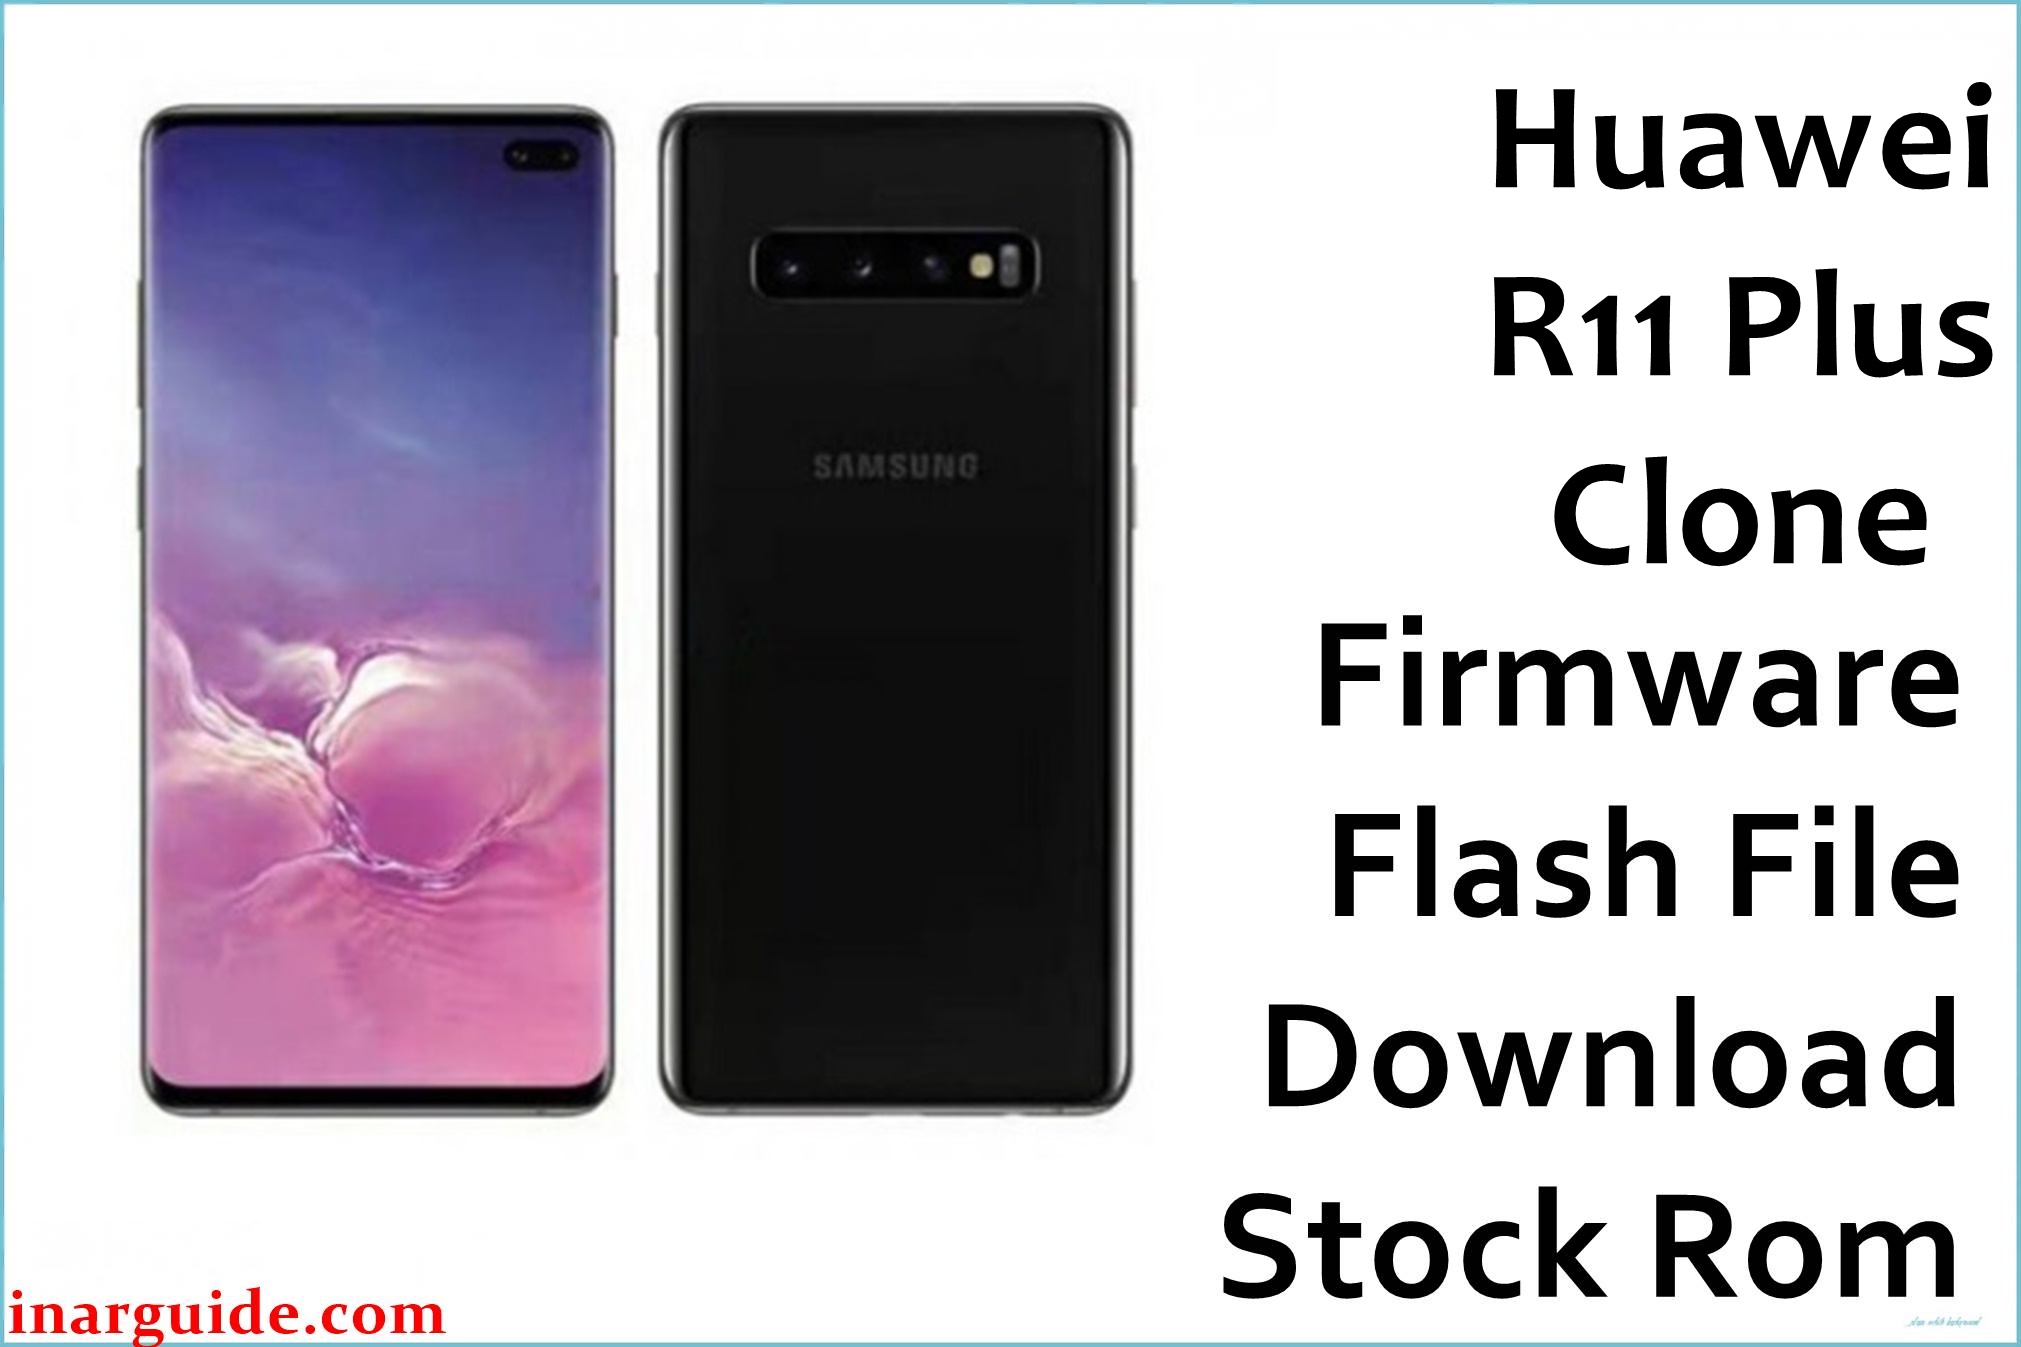 Huawei R11 Plus Clone